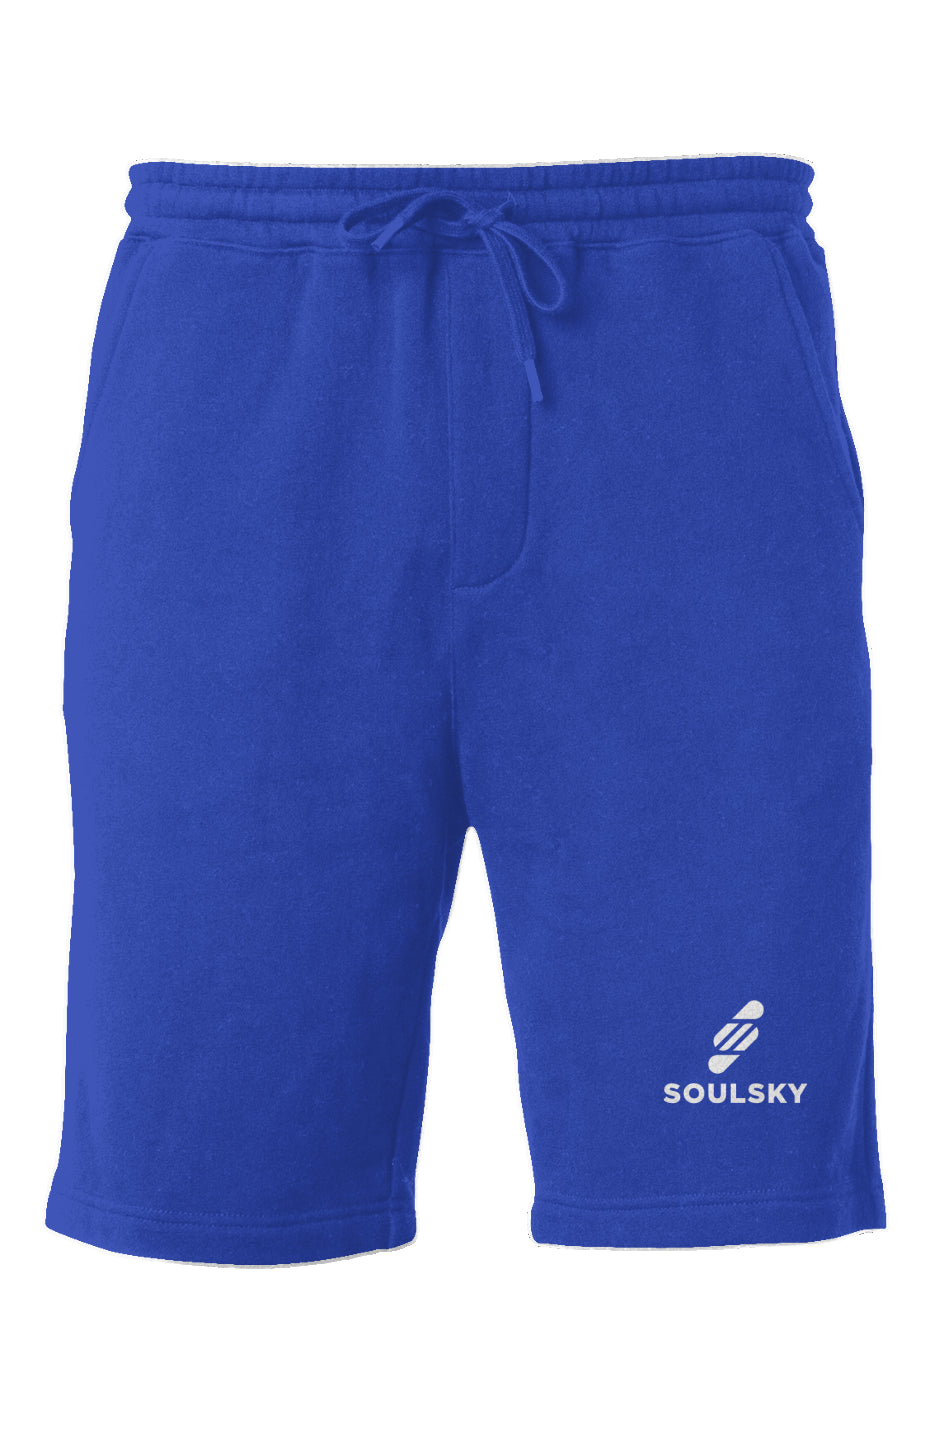 SOULSKY Men's Midweight Fleece Shorts (Royal Blue)